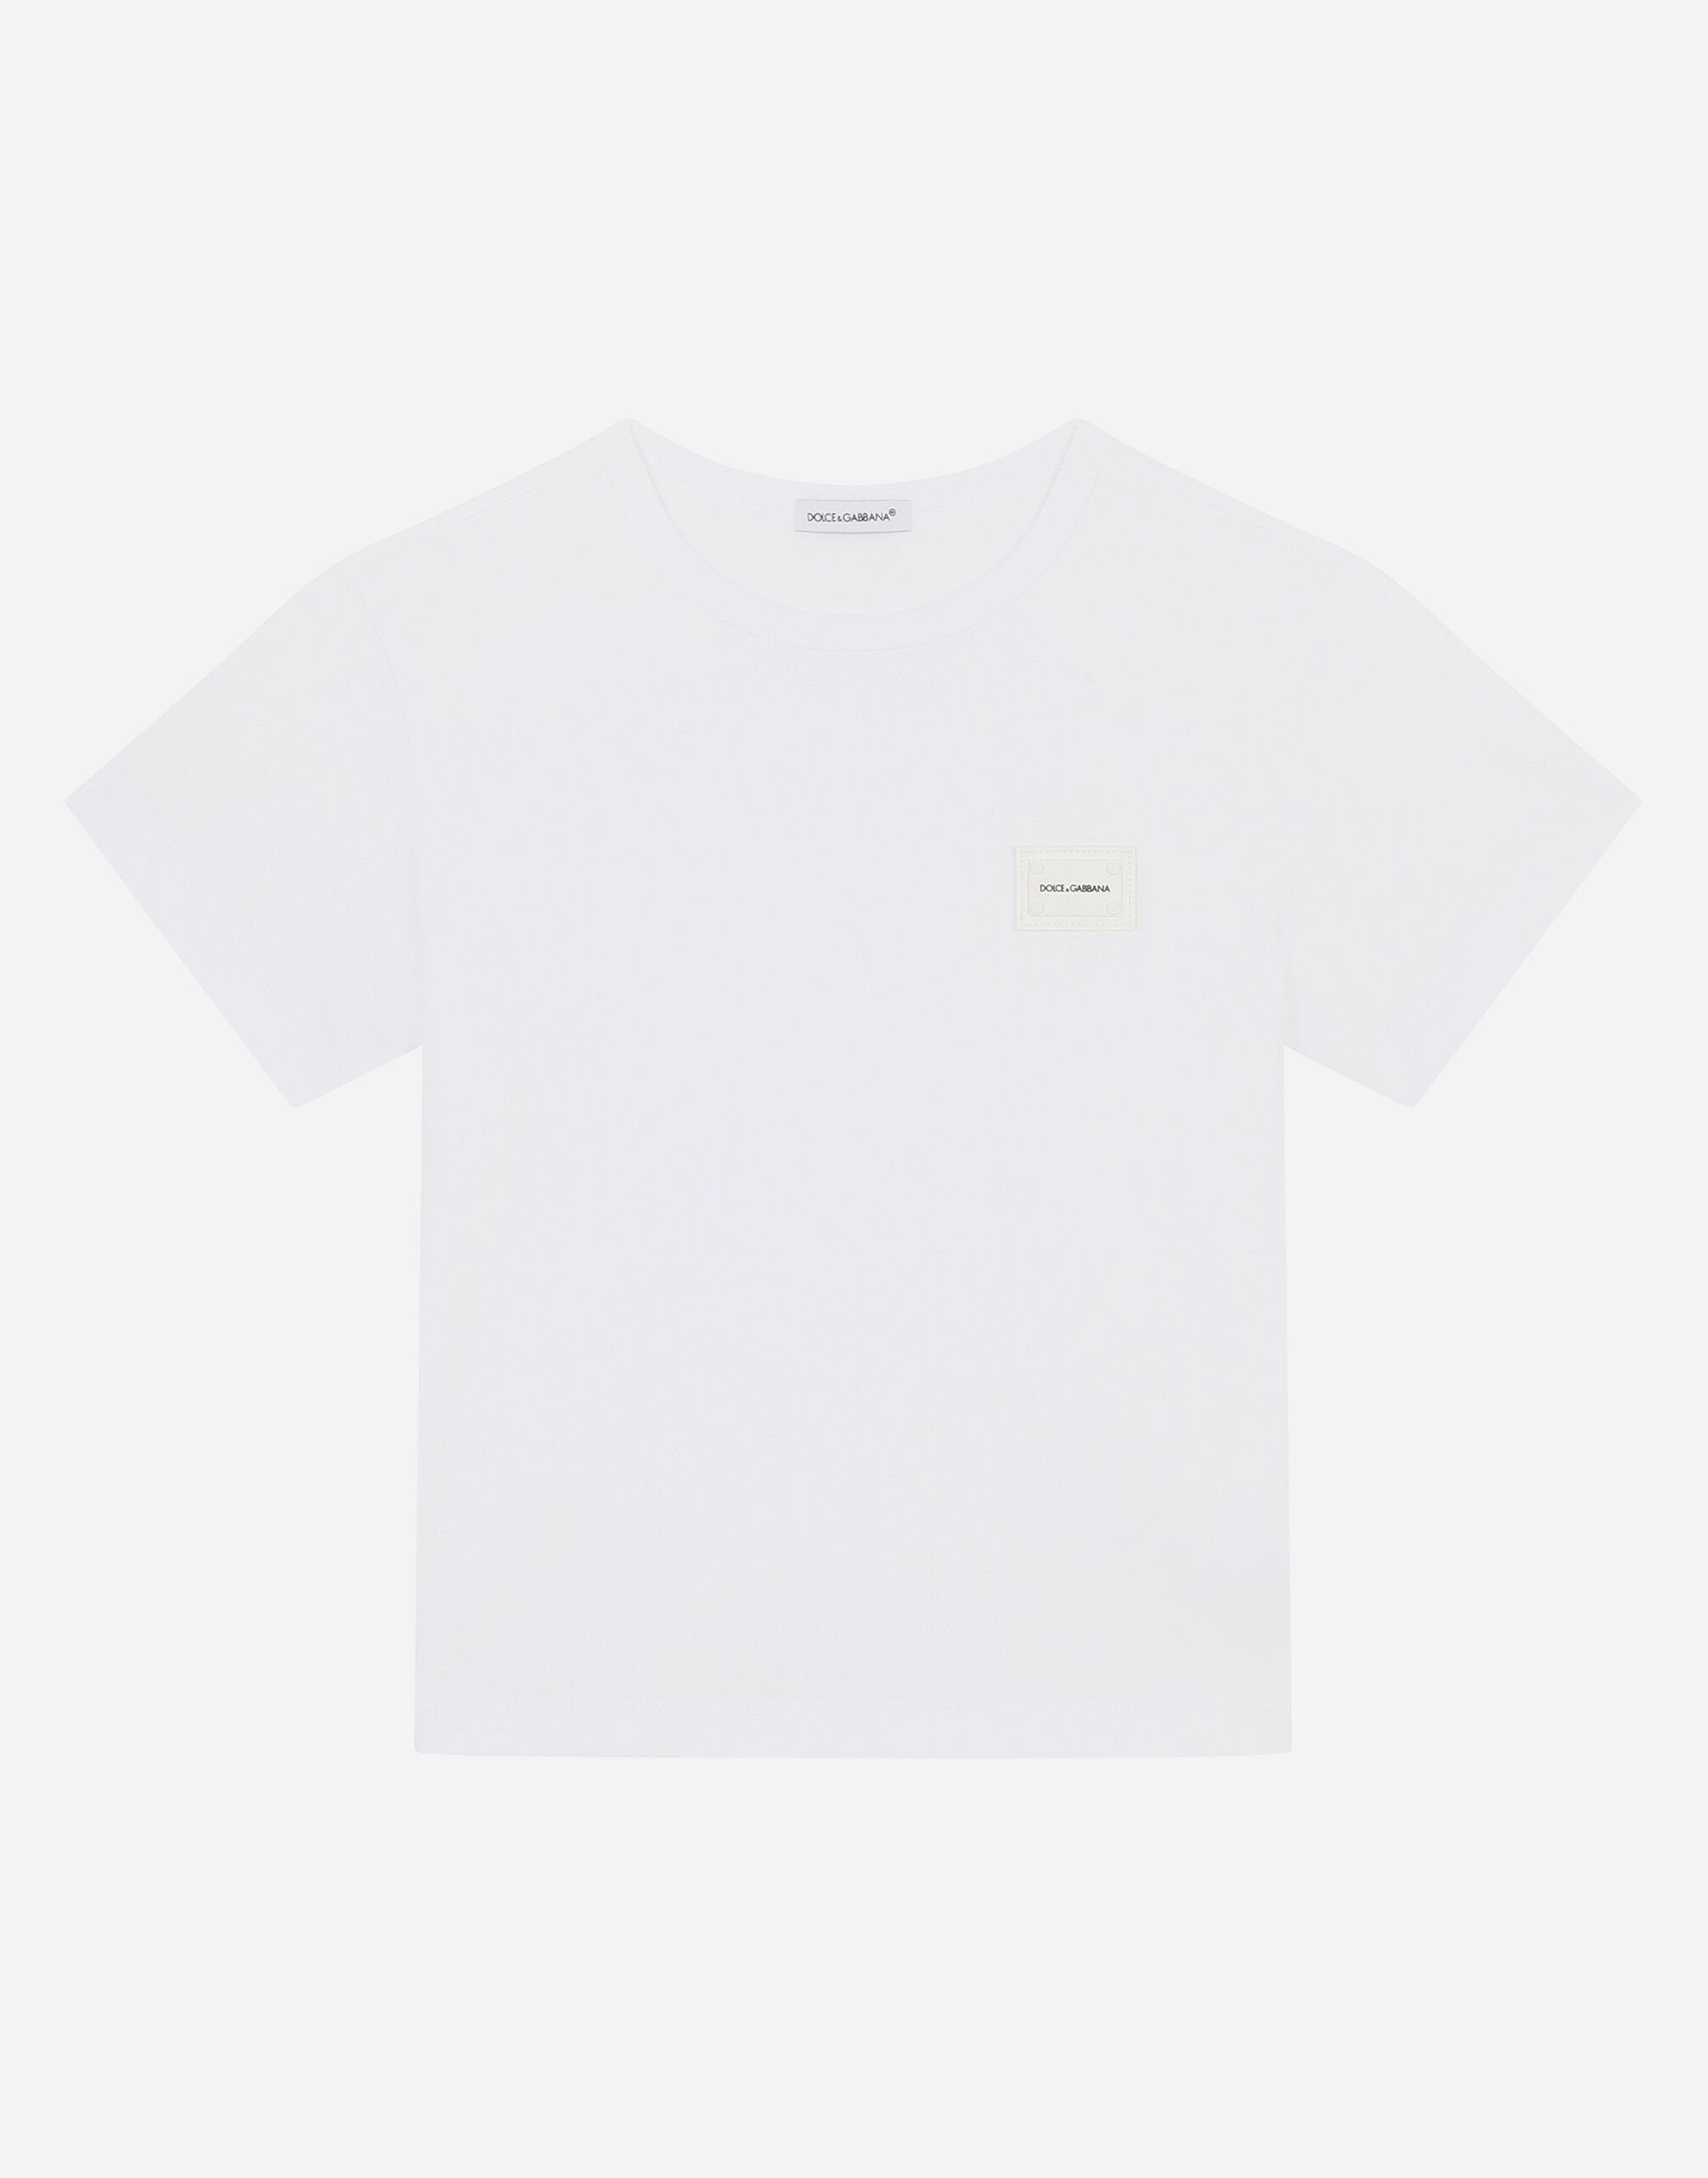 Dolce & Gabbana Jersey-t-shirt mit logoplakette SCHWARZ DA0687AE328